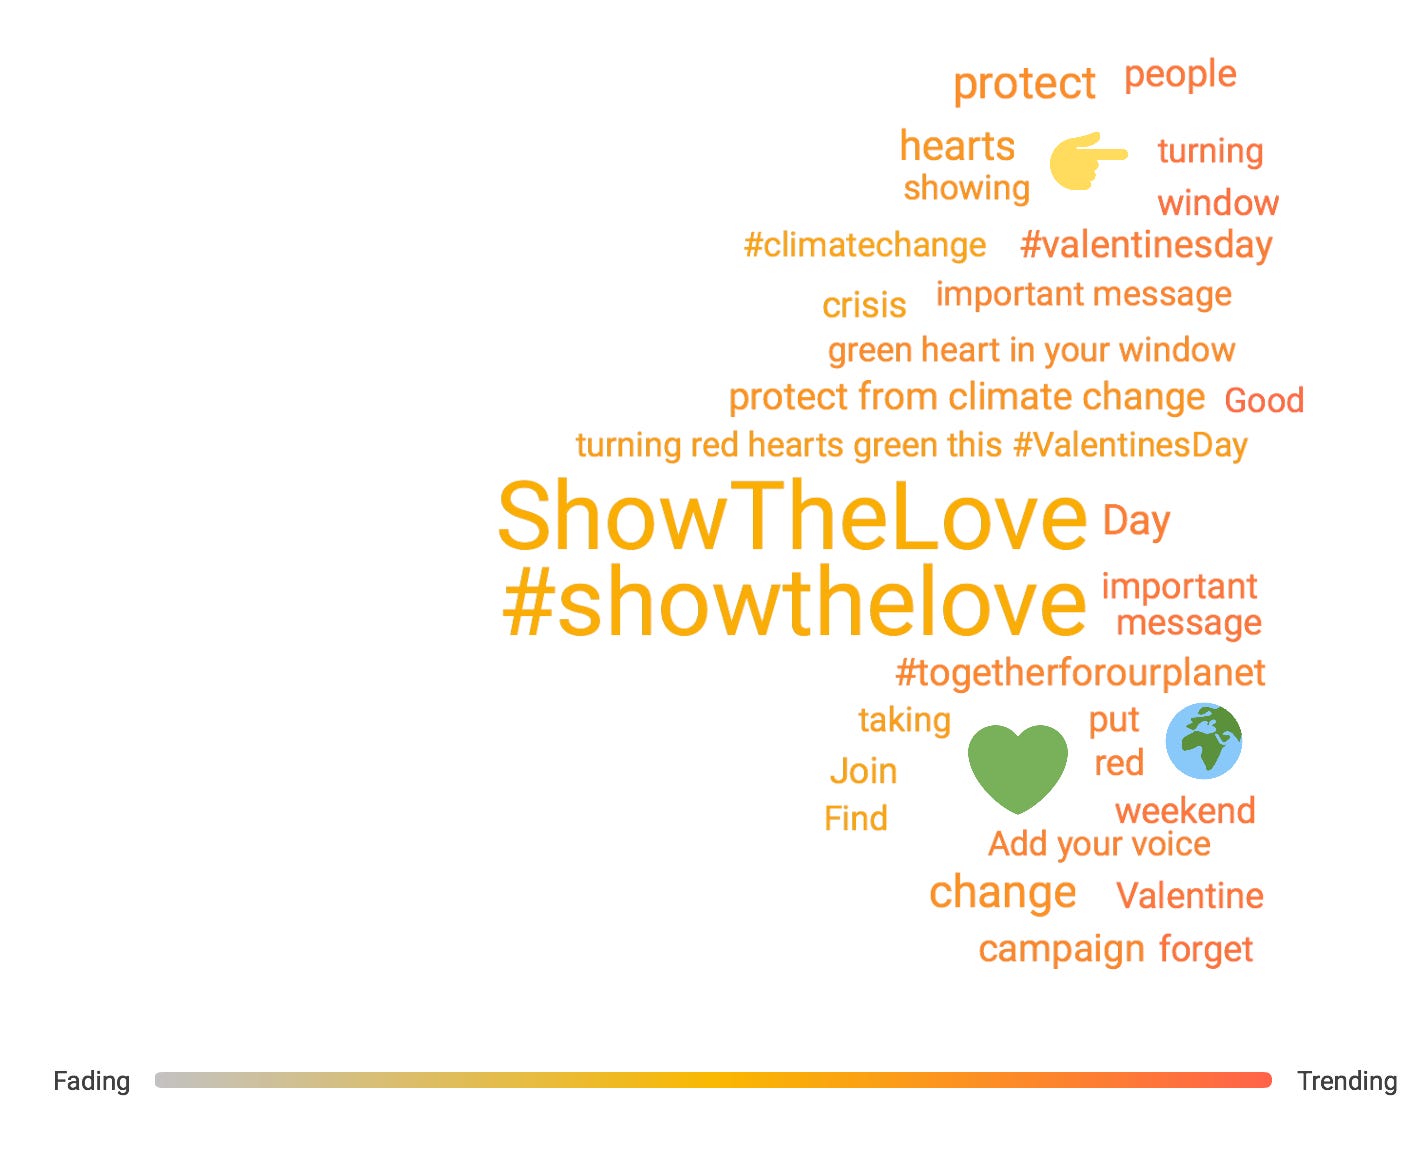 Show the Love trending topics, February 8-14, 2021.